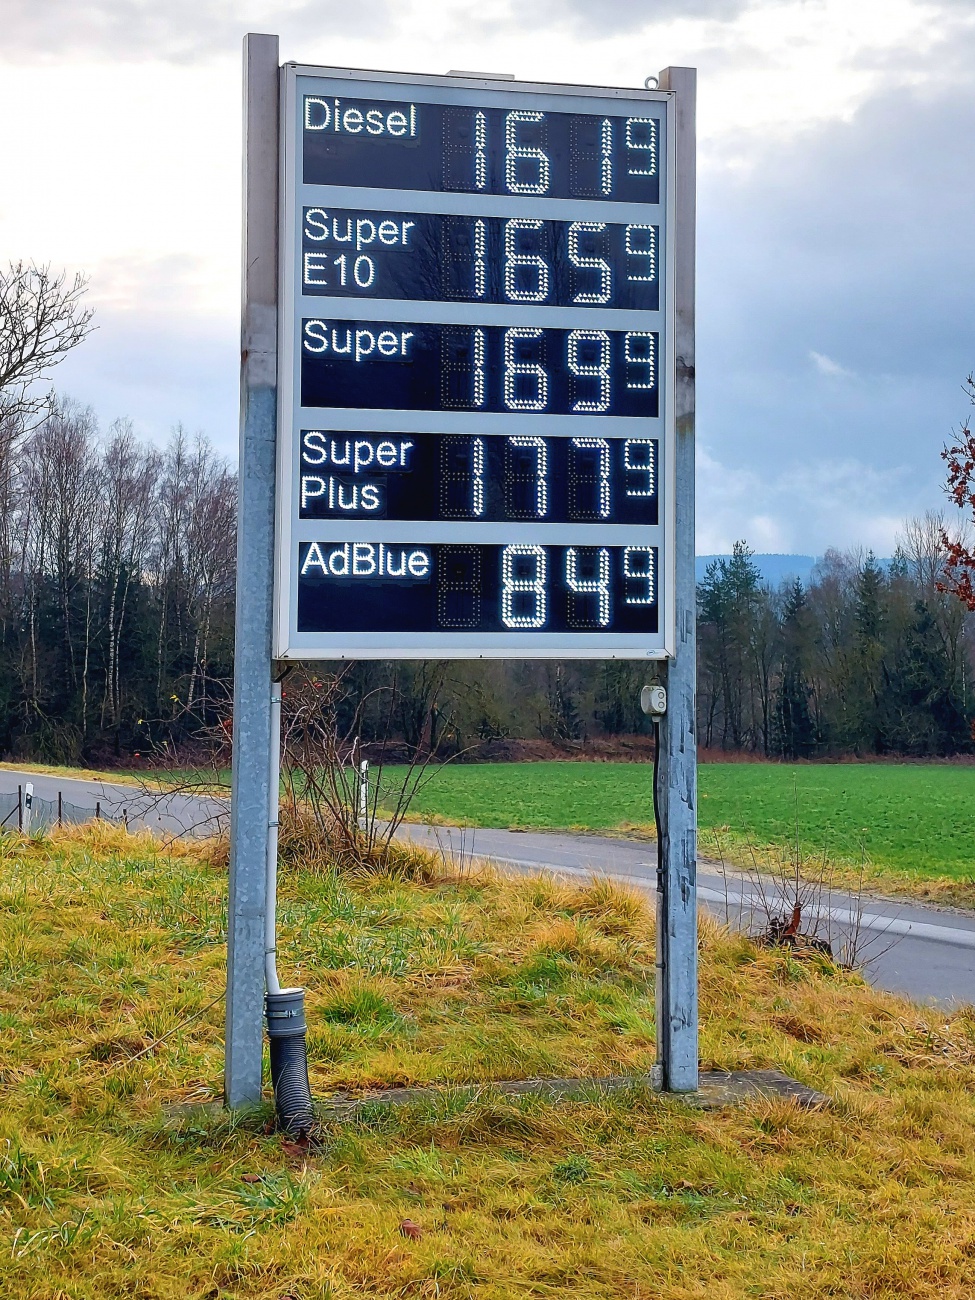 Foto: Martin Zehrer - Sprit-Preise in Neusorg am 6. Januar 2024<br />
<br />
Benzin<br />
Diesel<br />
Super 